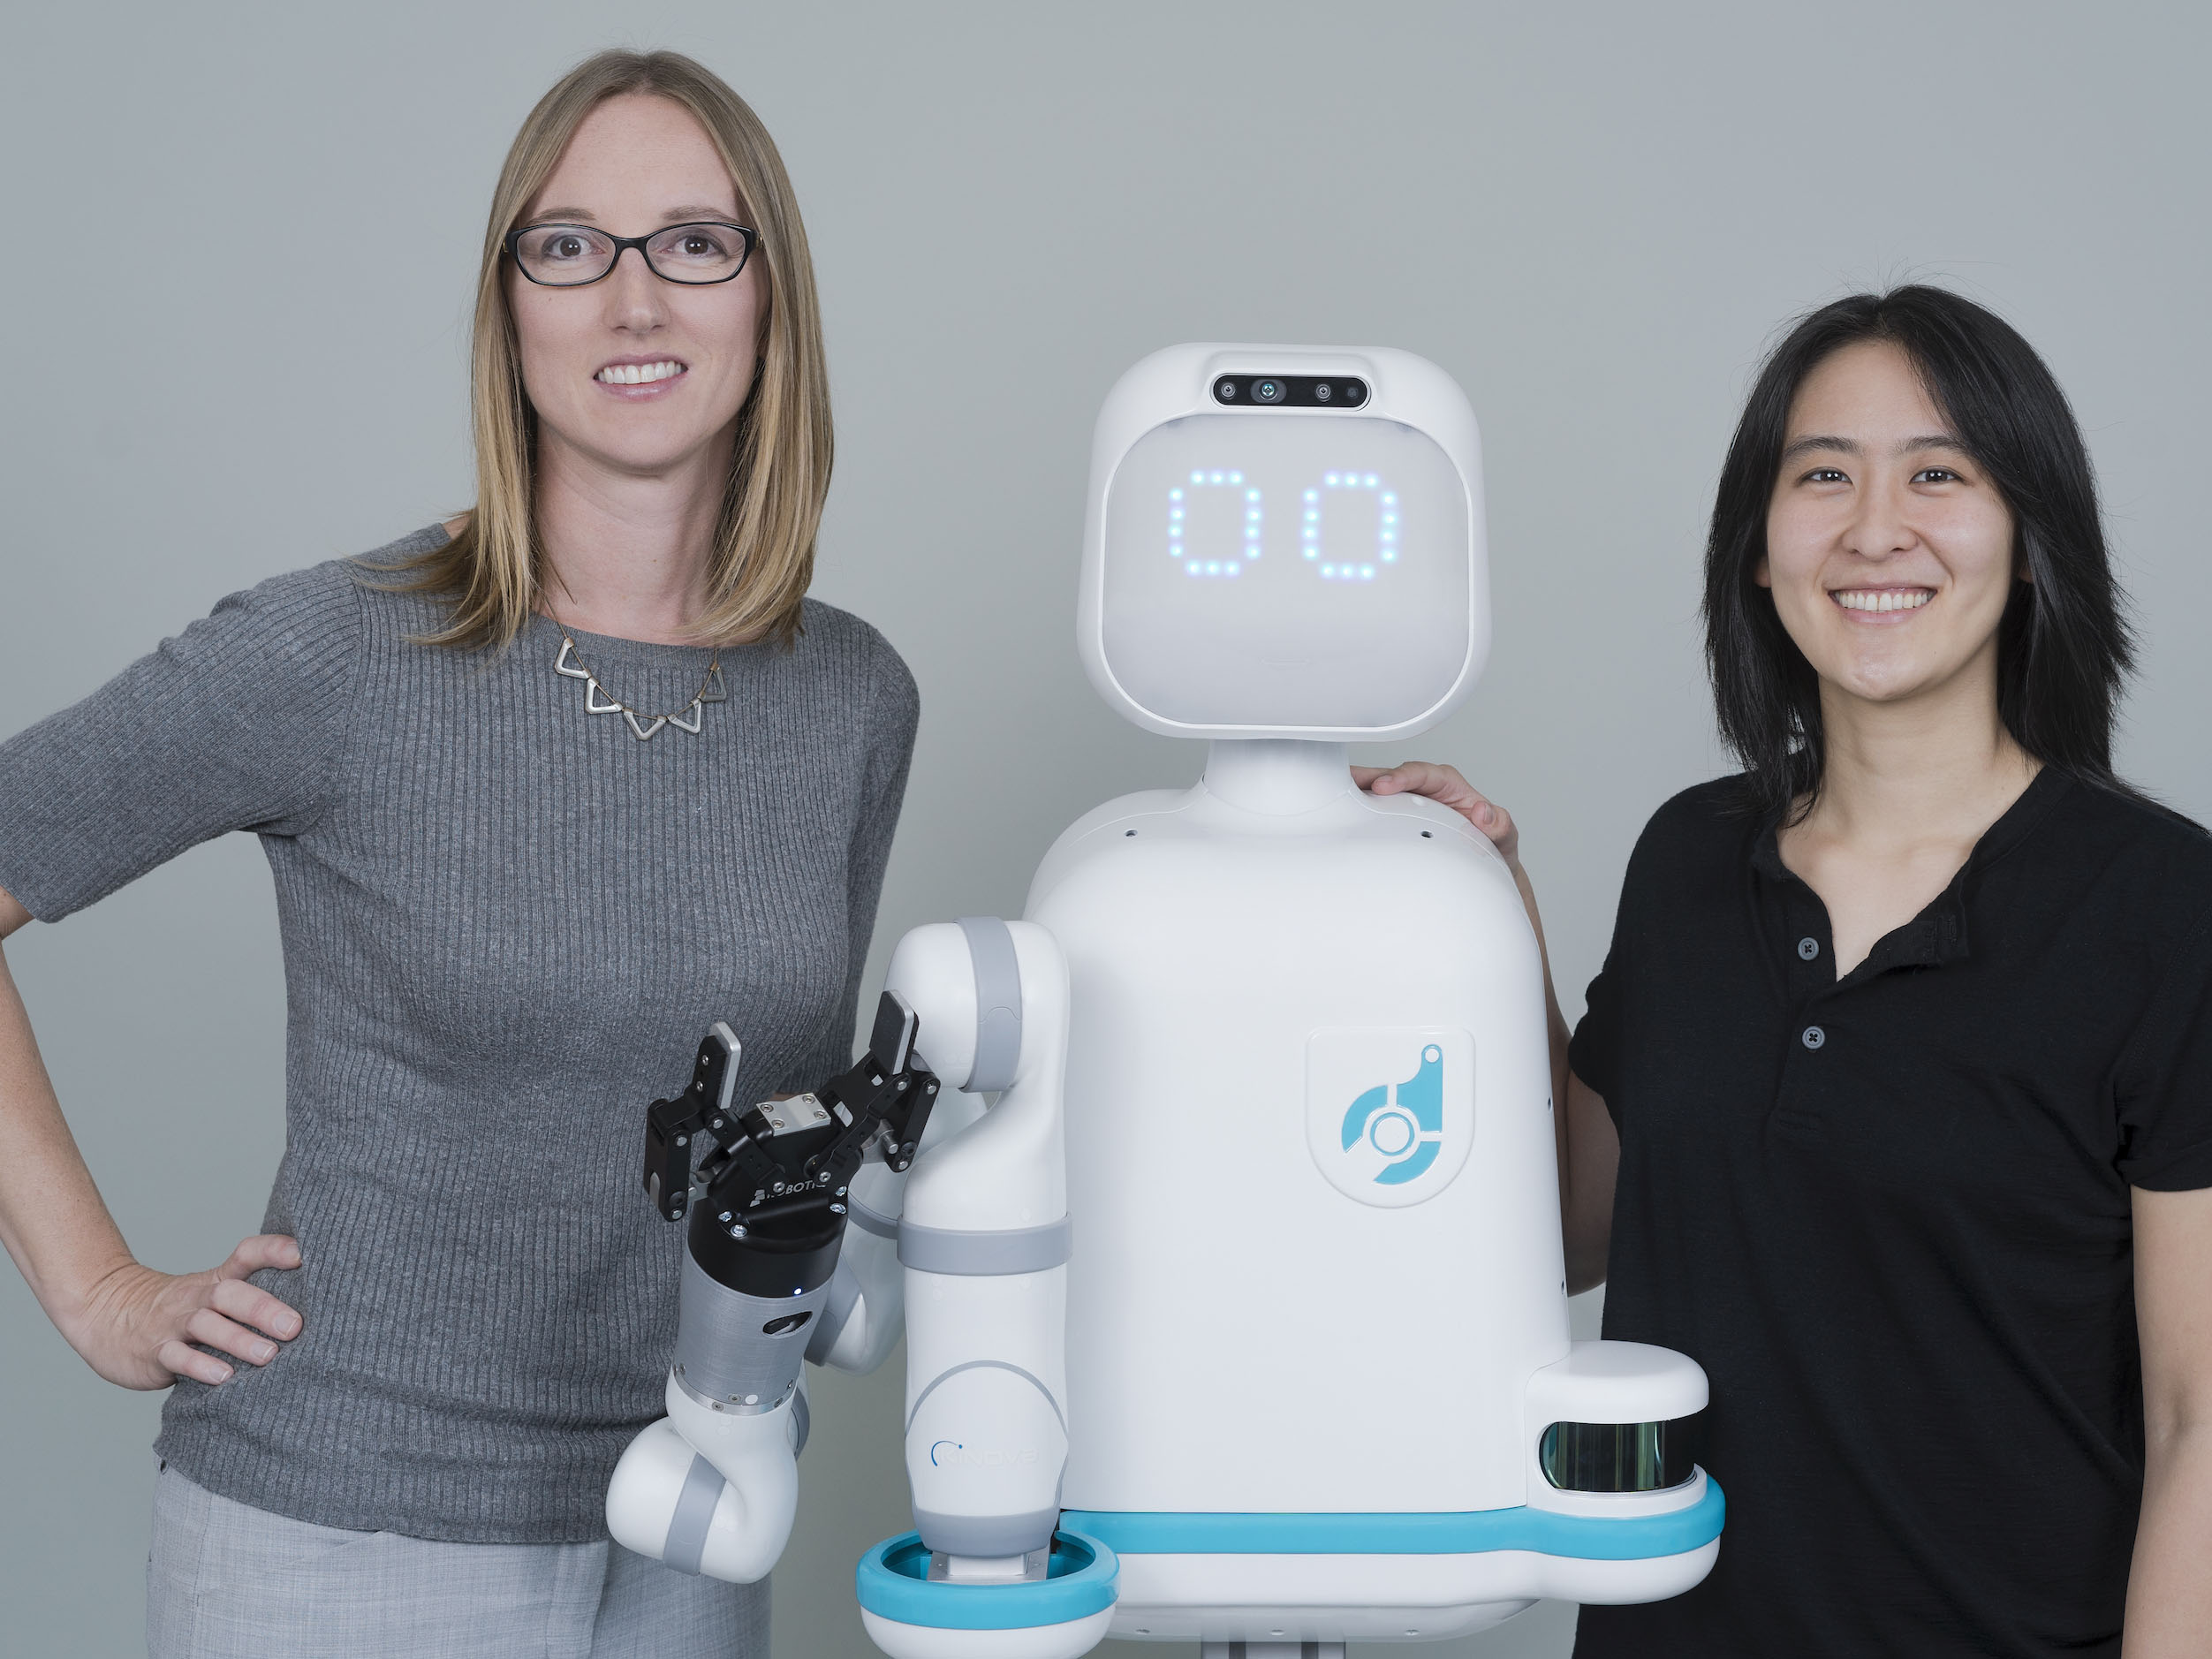 Andrea Thomaz standing next to robot